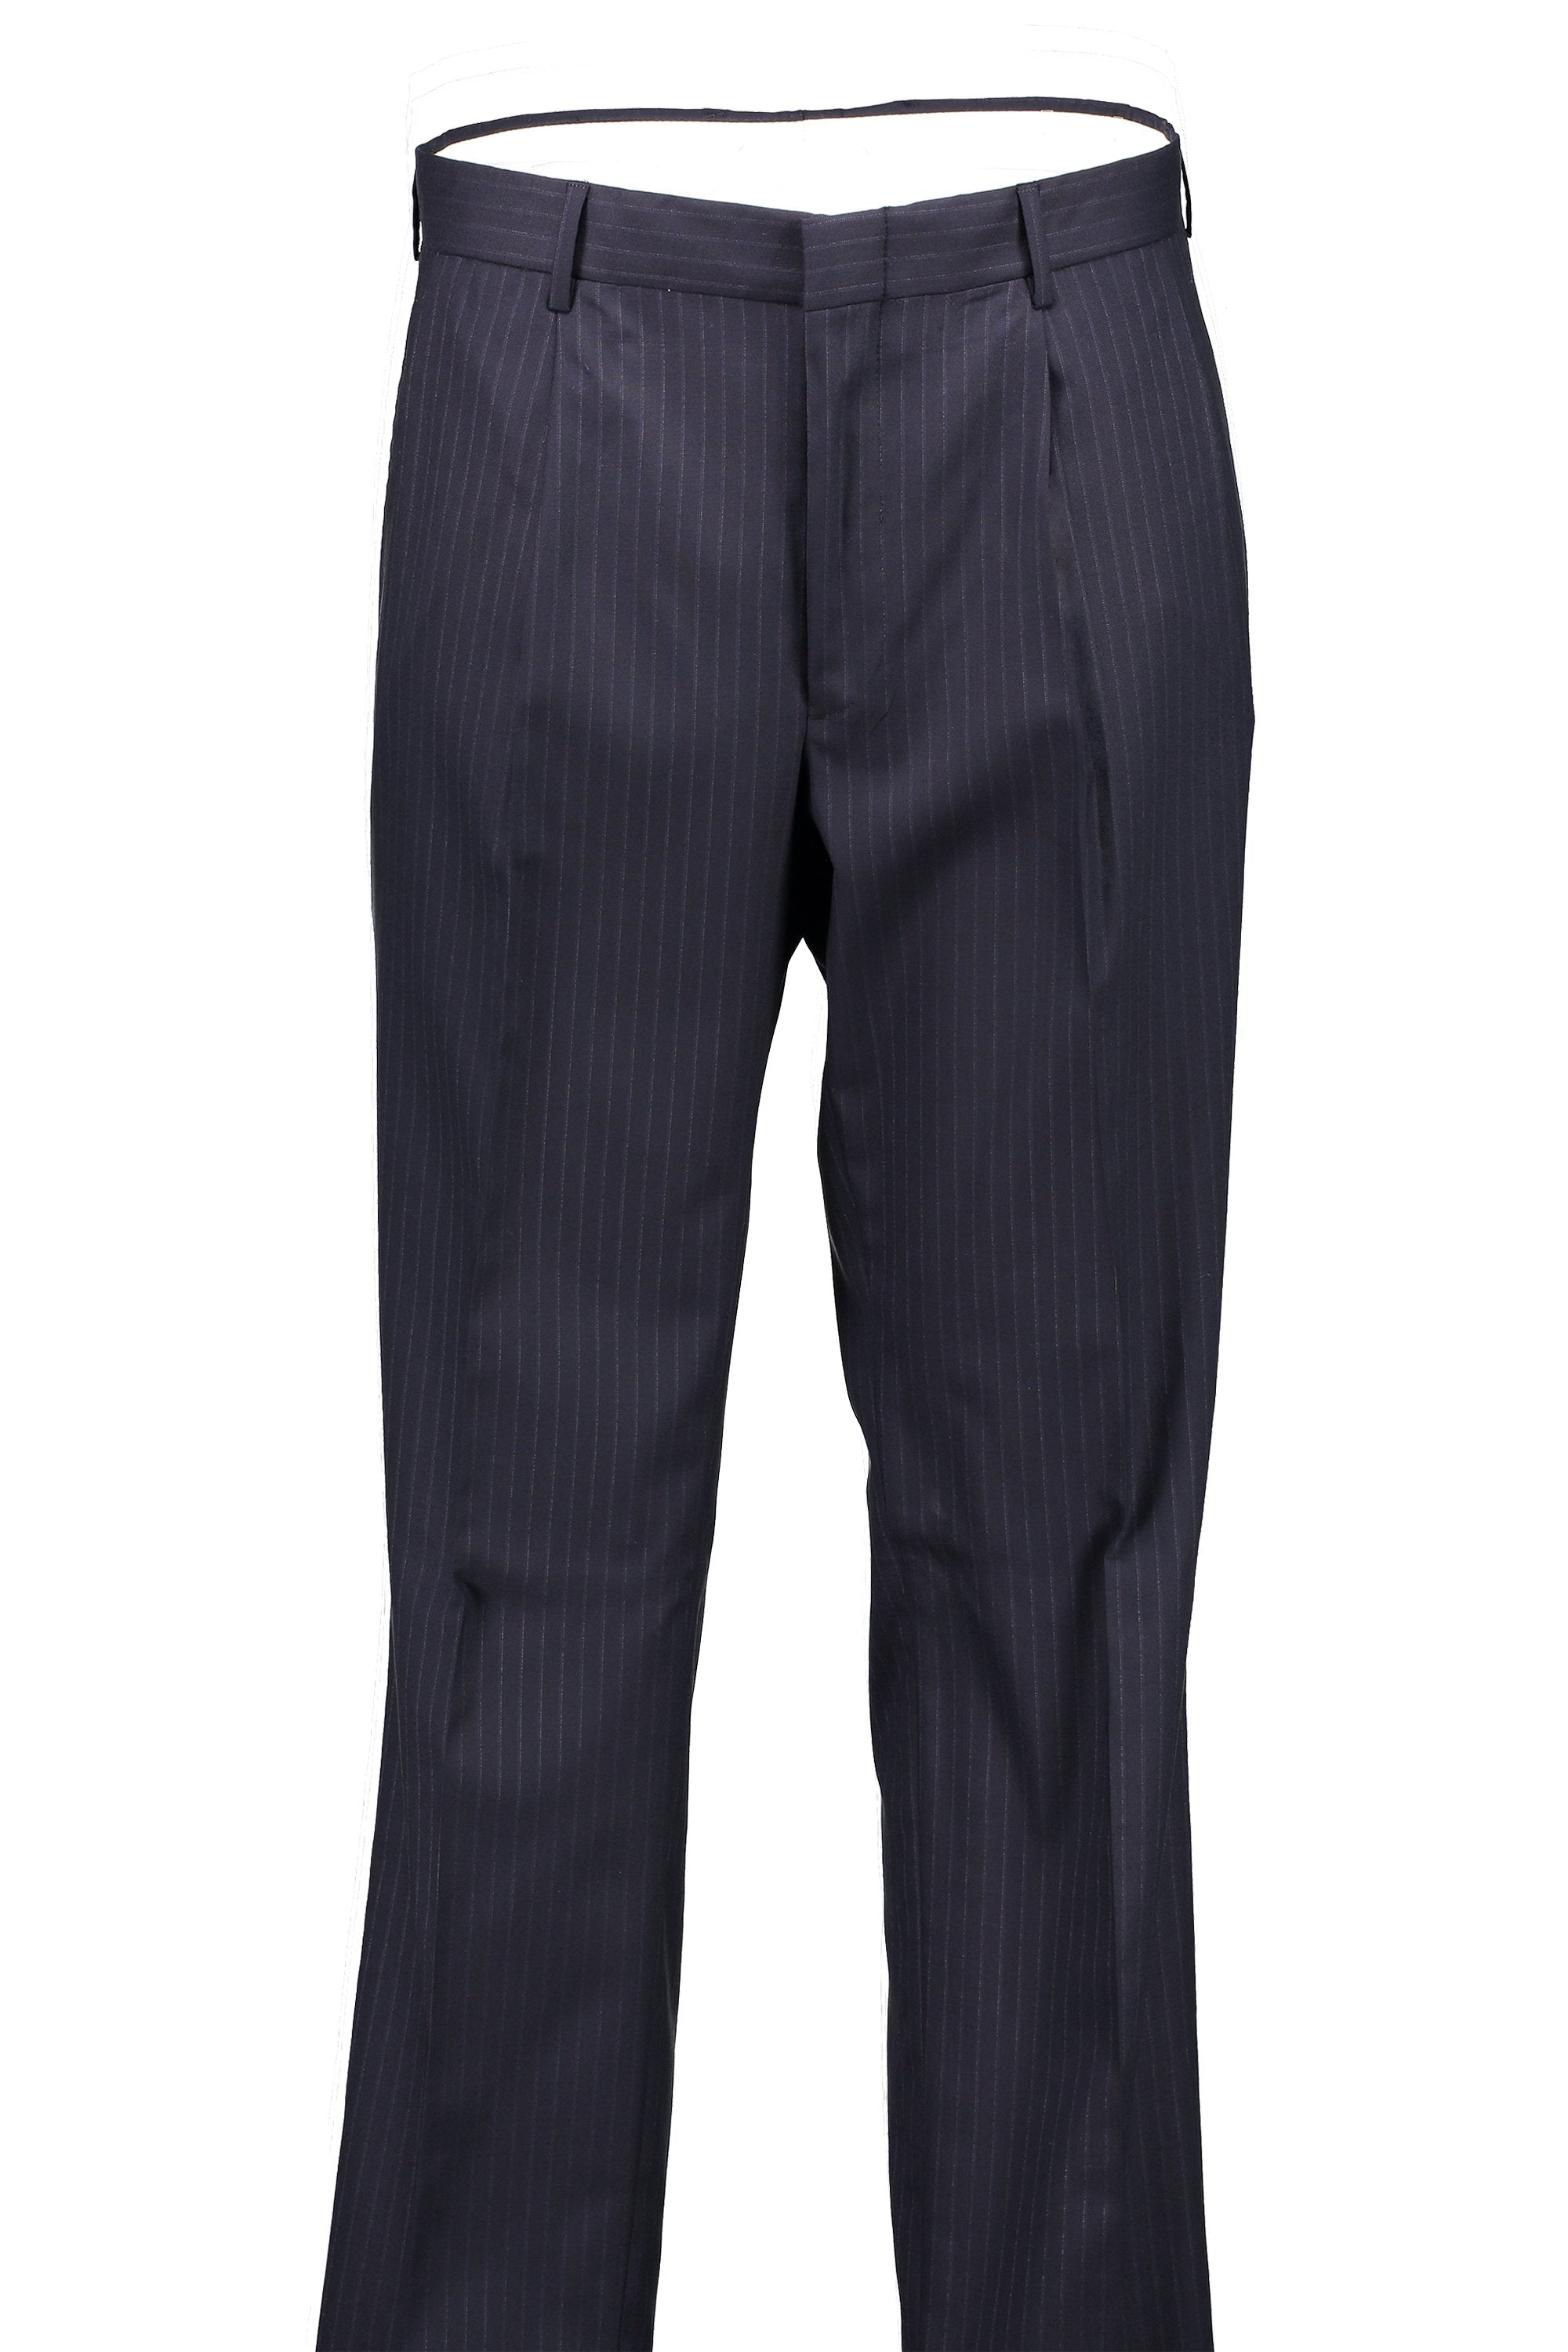 Men's Pleated Pant Classic Cut - NAVY STRIPE 98/2 WOOL/LYCRA SUPER100